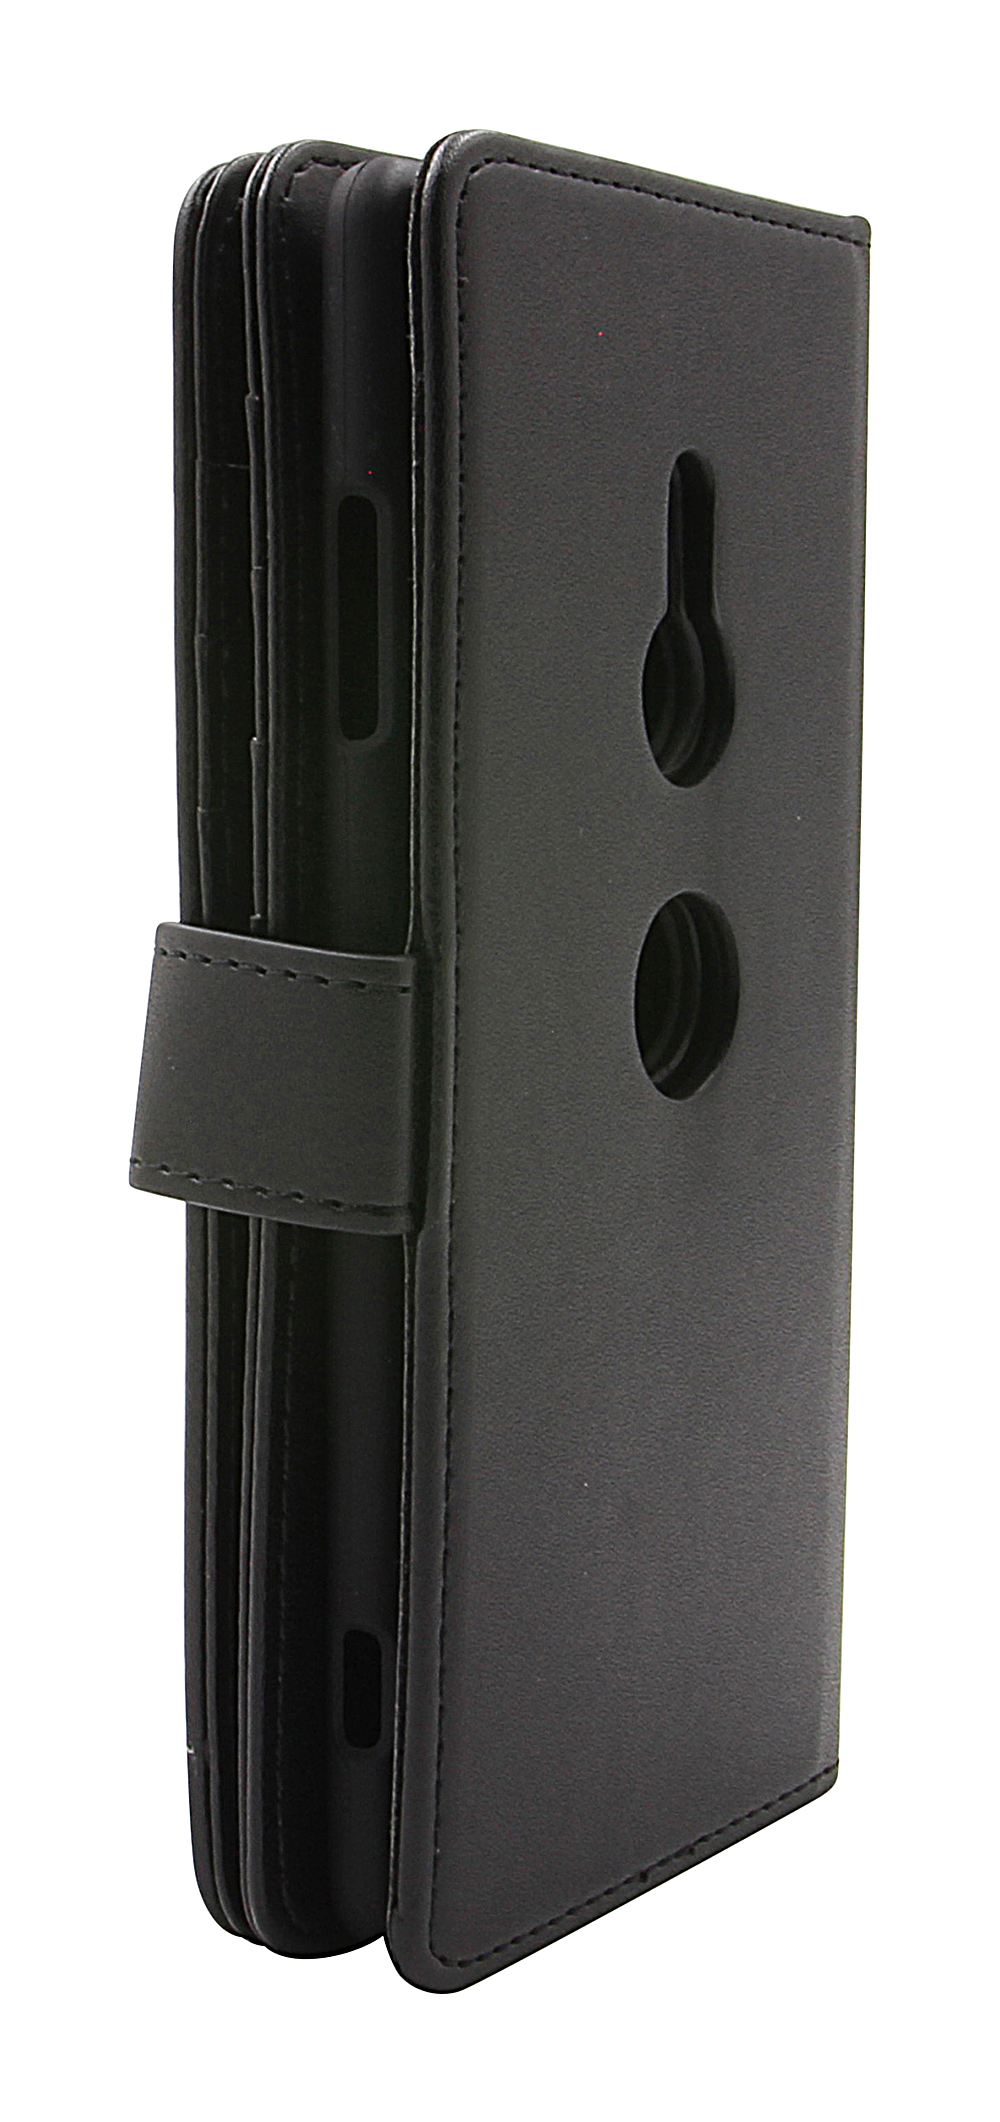 CoverIn Skimblocker XL Magnet Wallet Sony Xperia XZ3